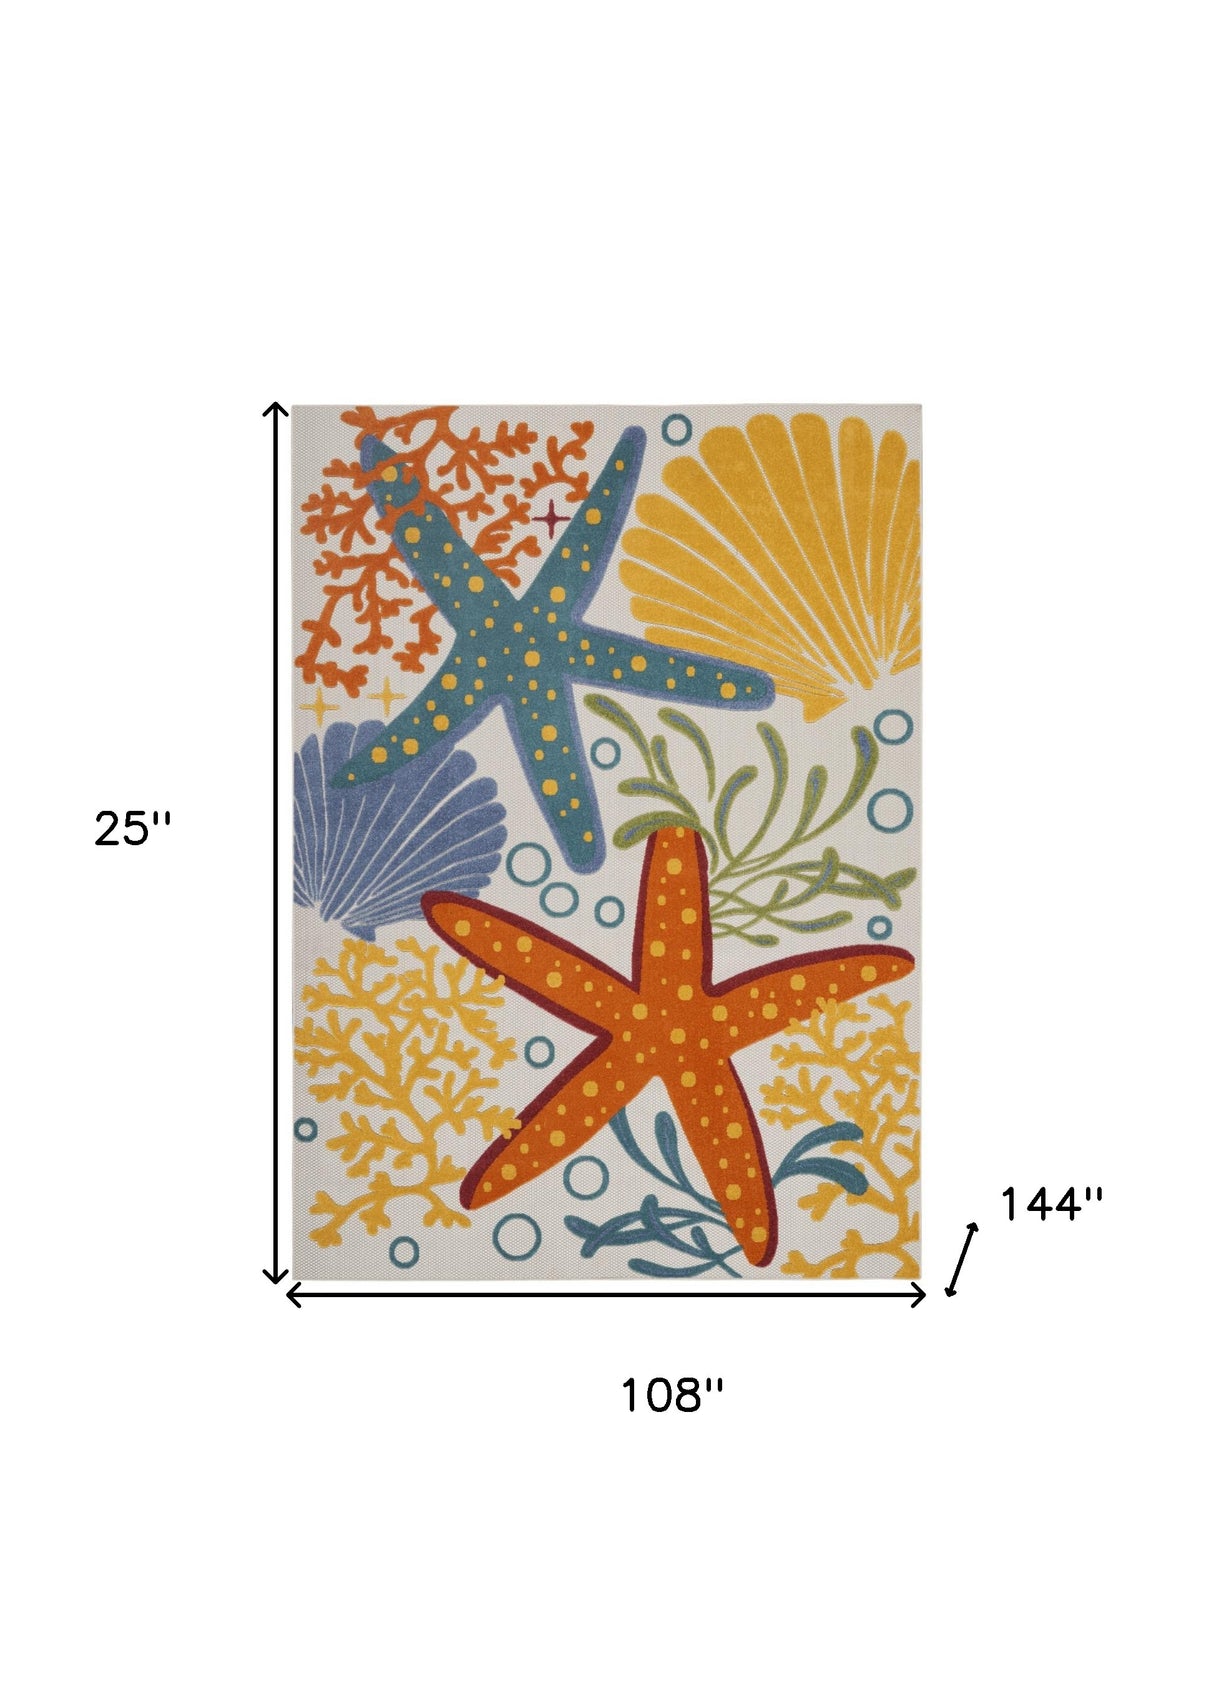 9' X 12' Orange Blue And Yellow Animal Print Non Skid Indoor Outdoor Area Rug